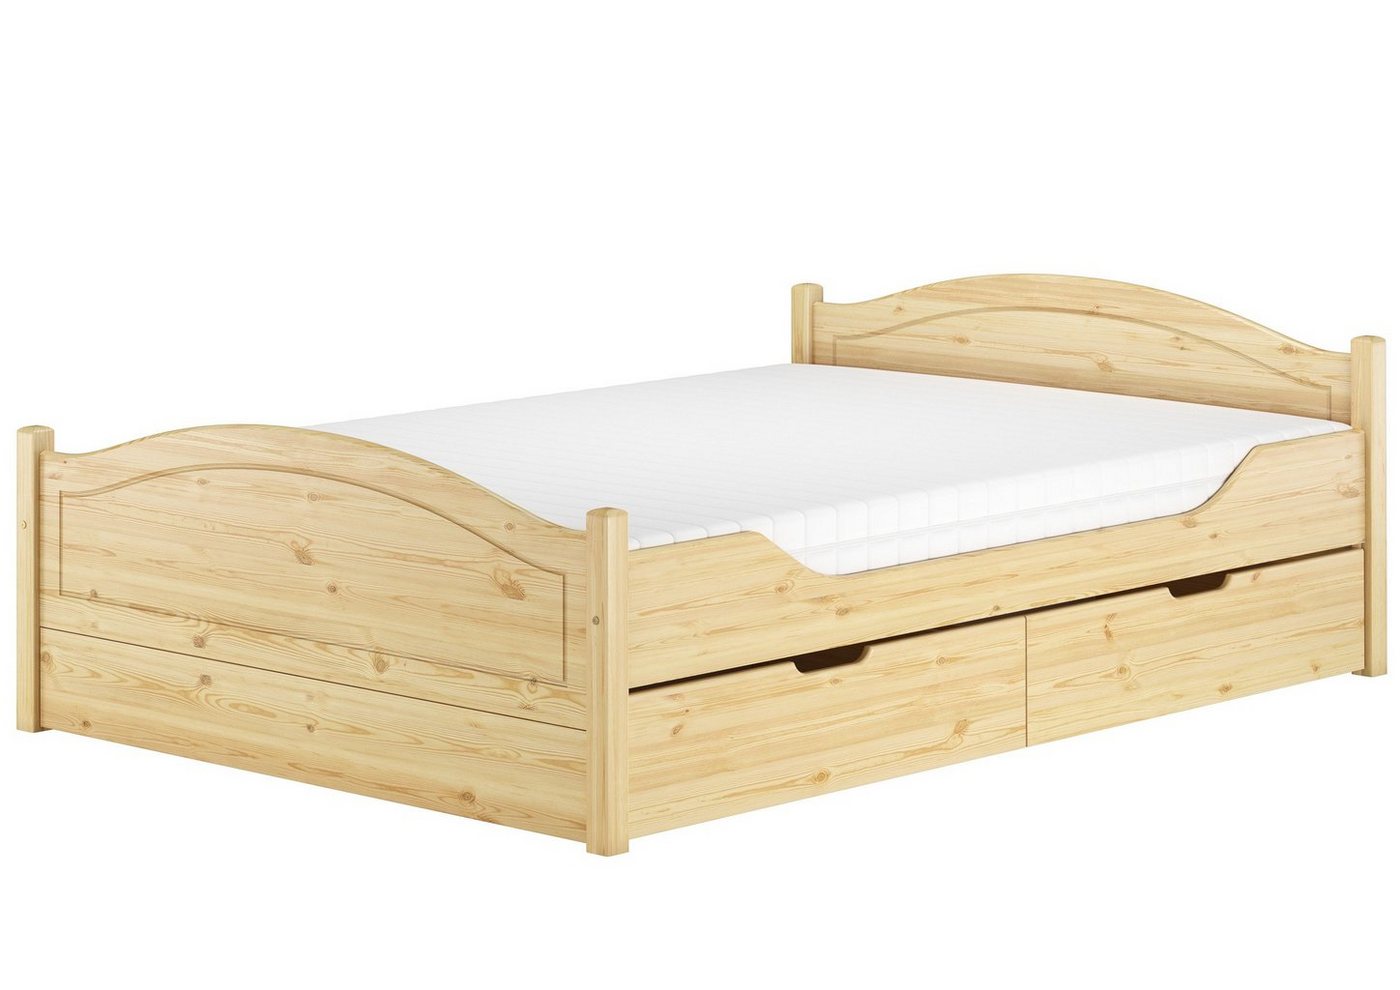 ERST-HOLZ Bett Doppelbett 140x200 Komplettset Bett mit Staukasten, Kieferfarblos lackiert von ERST-HOLZ